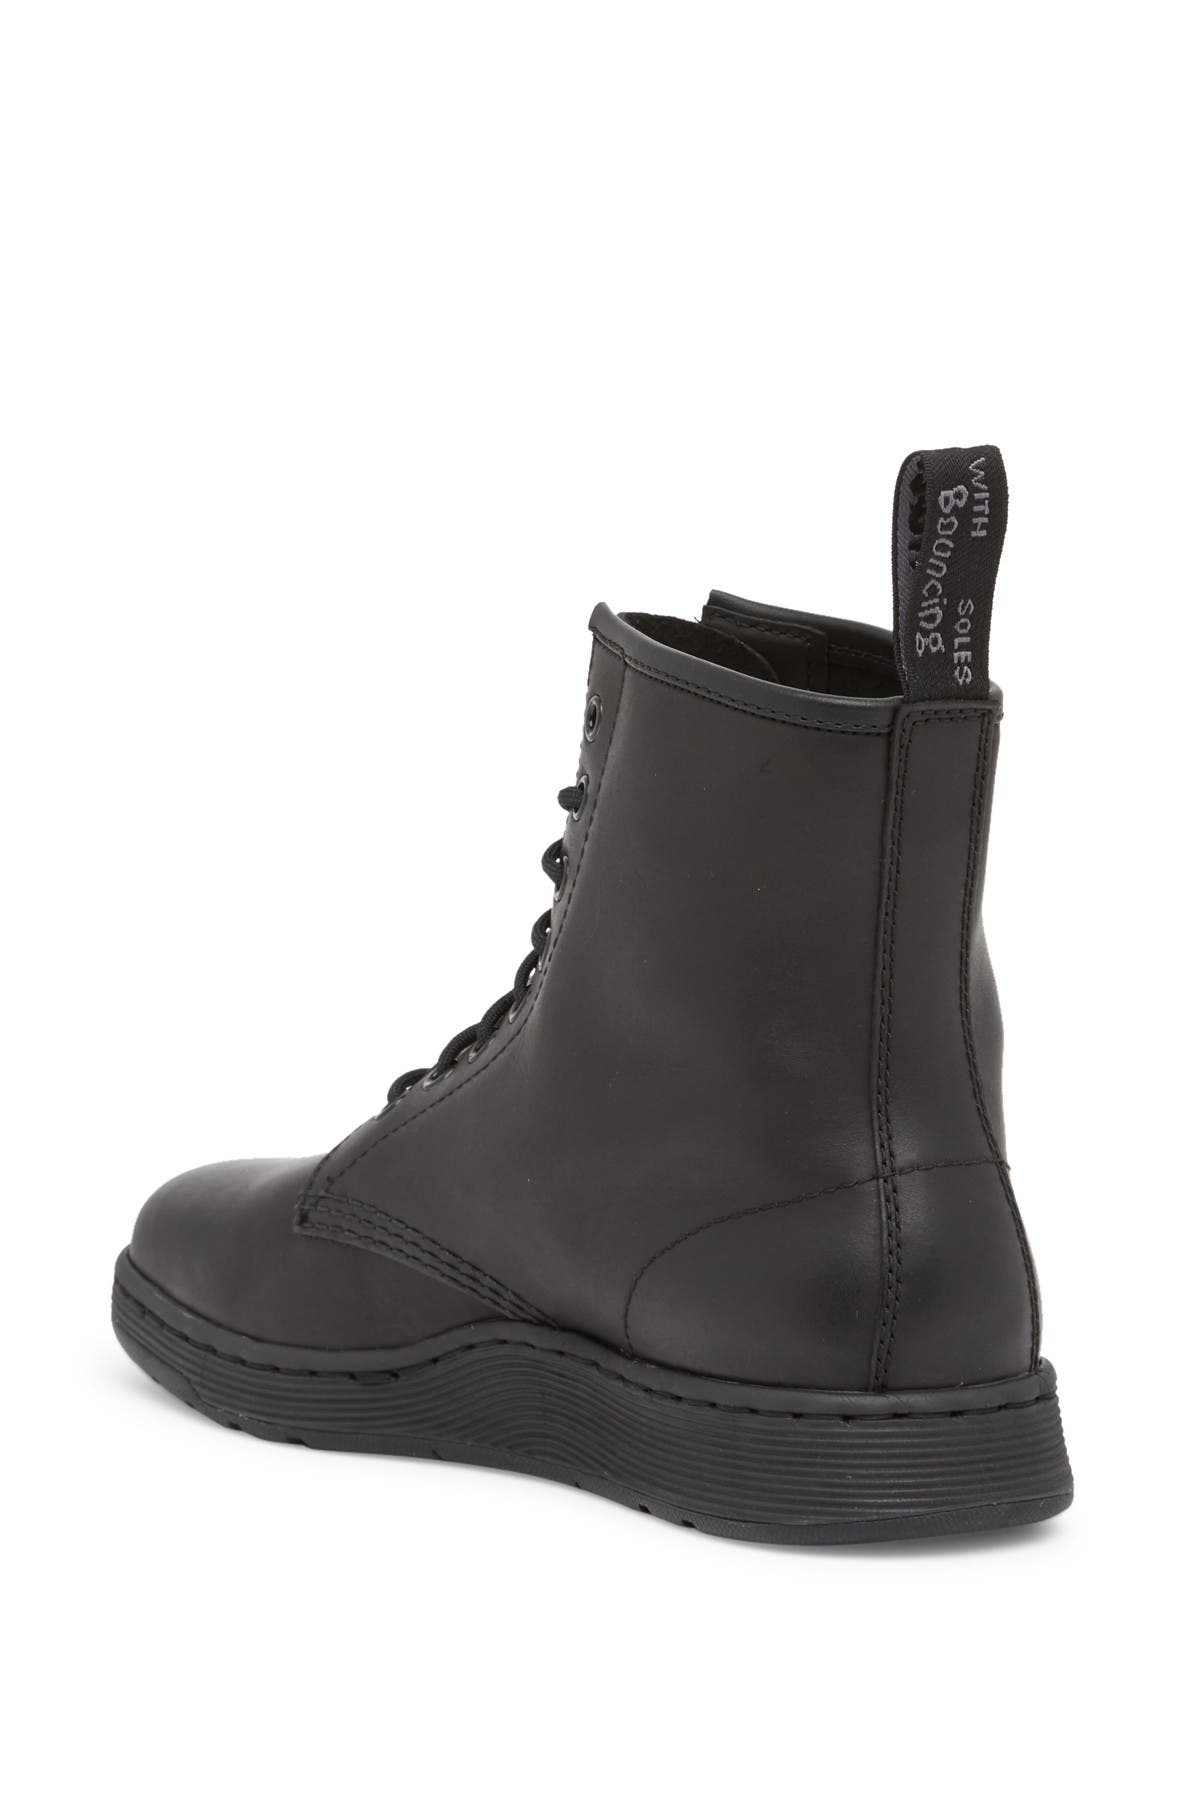 newton bts leather boot